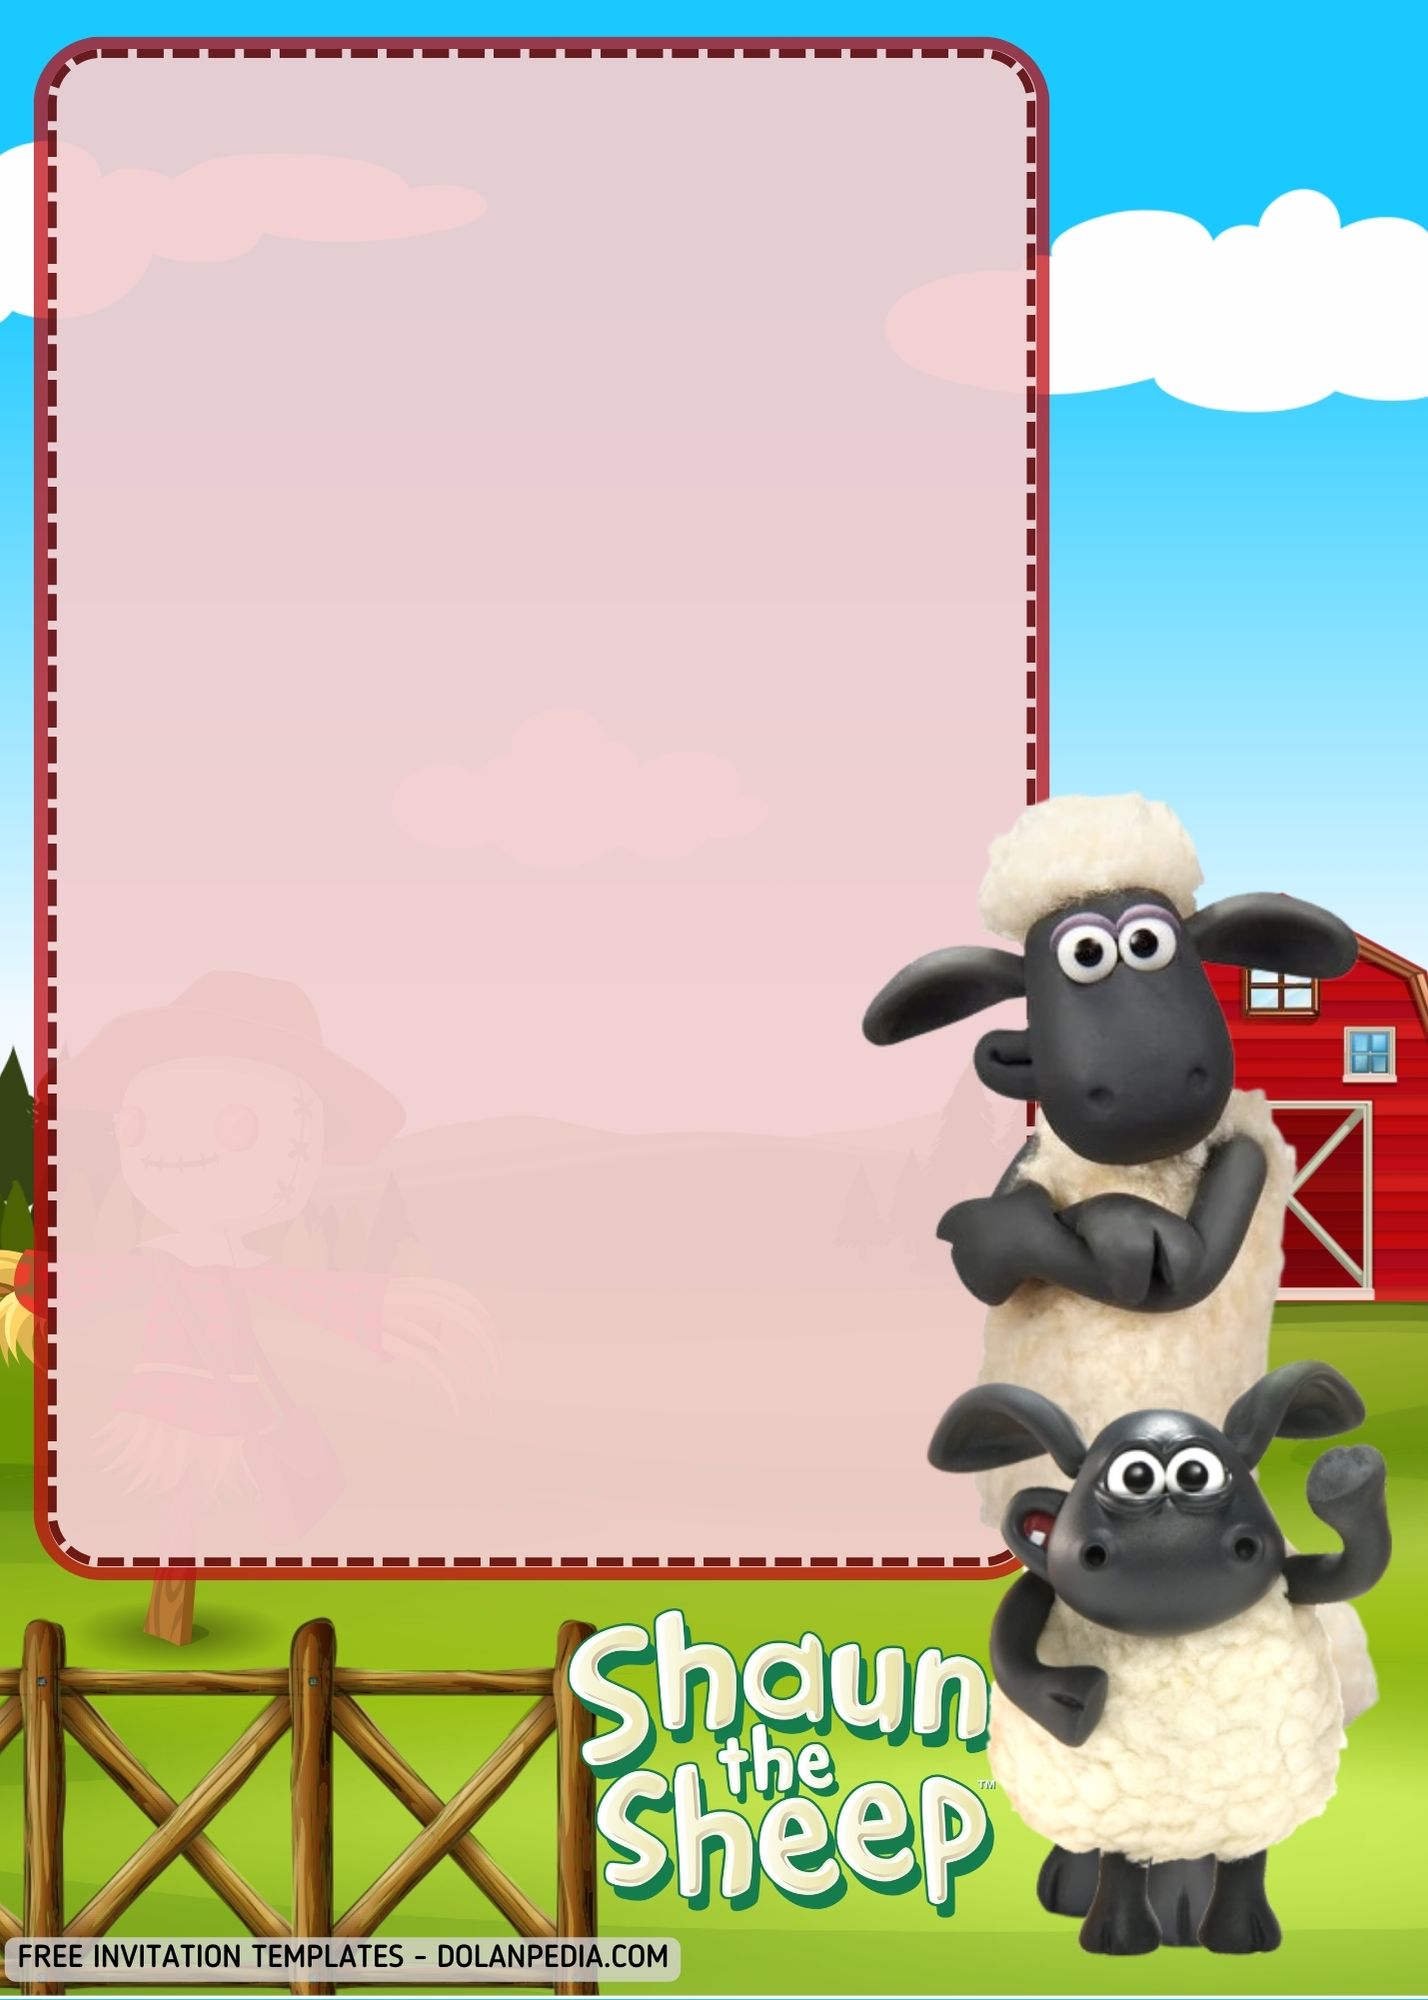 FREE Shaun The Sheep Farmyard Party Invitation Templates